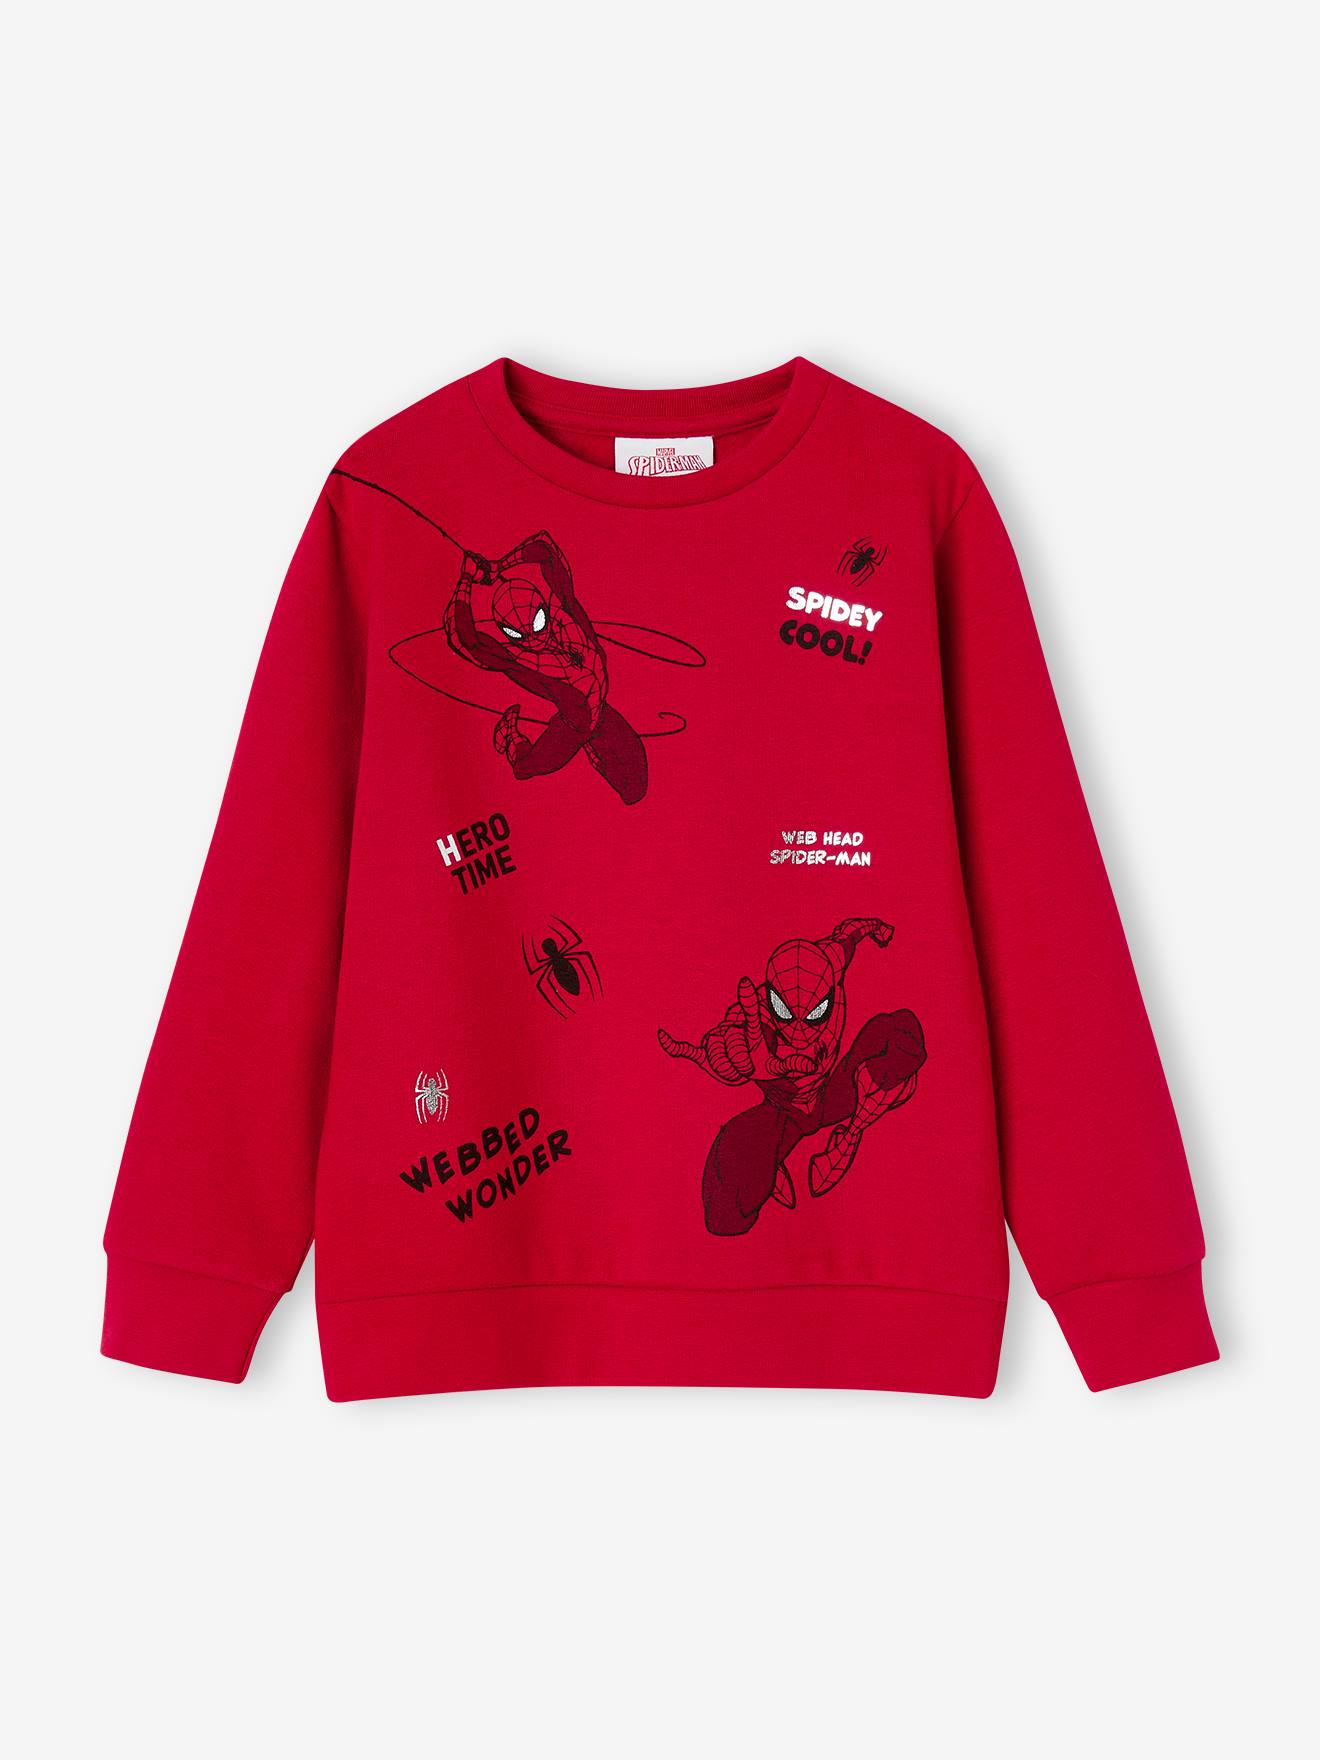 Sweatshirt for Boys, Spiderman(r) by Marvel red